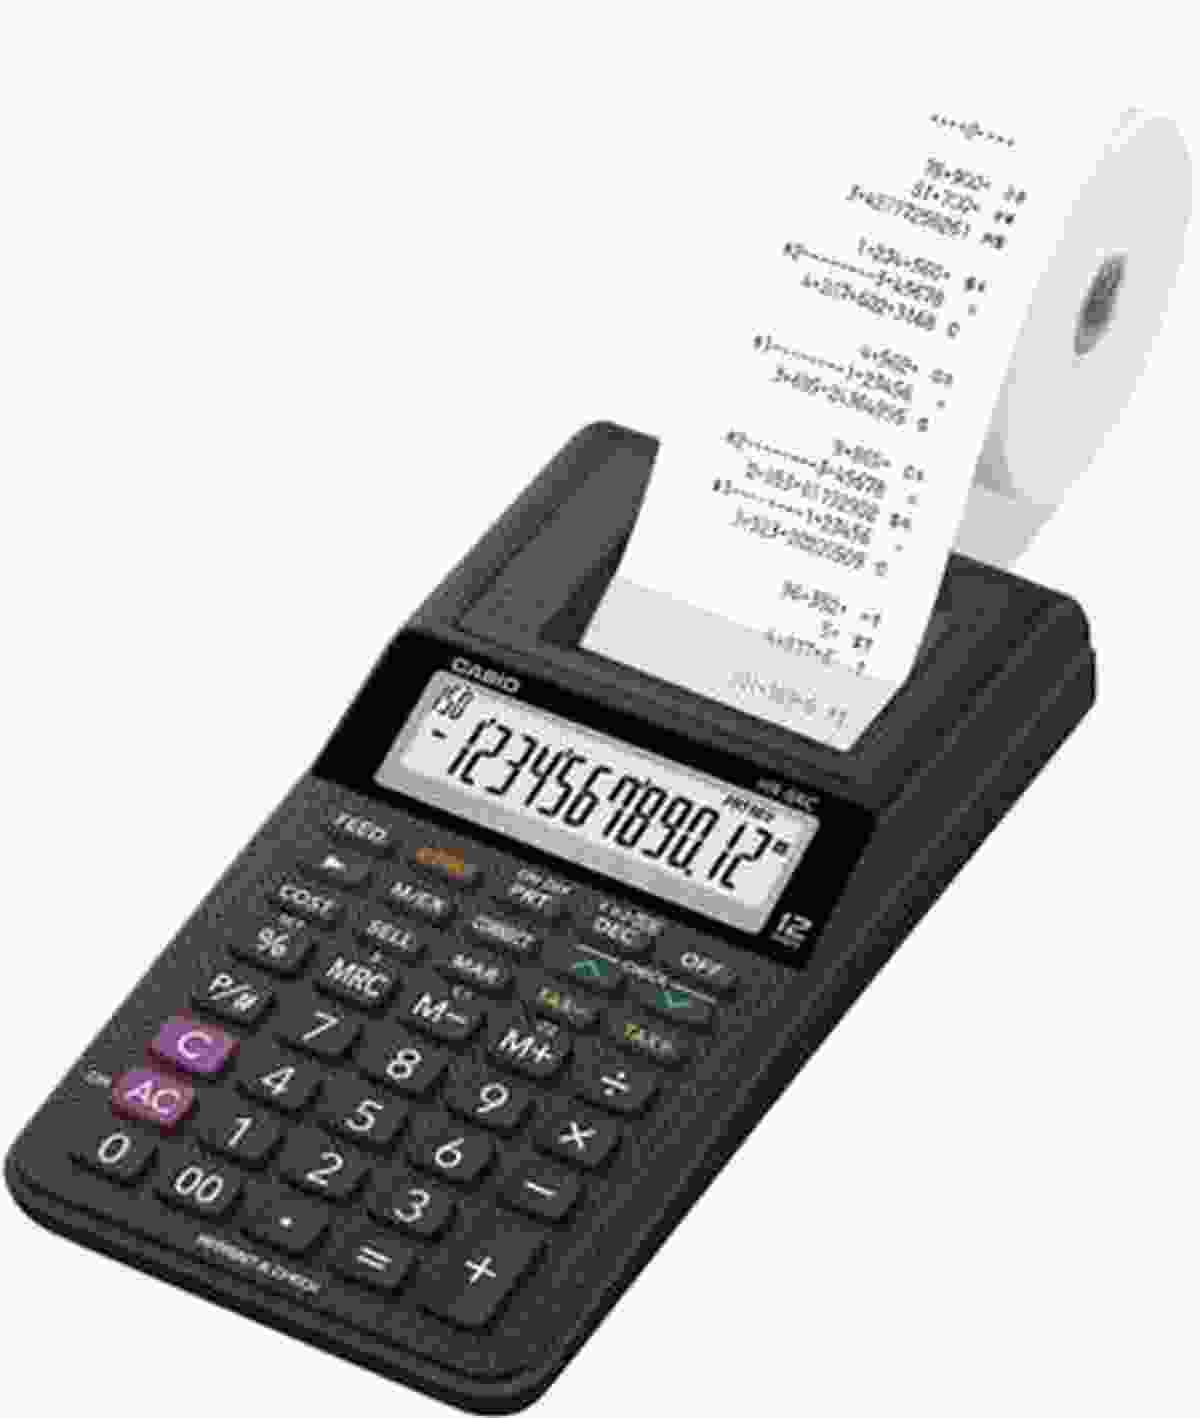 Casio HR-8RC-BK Handheld Printing Calculator